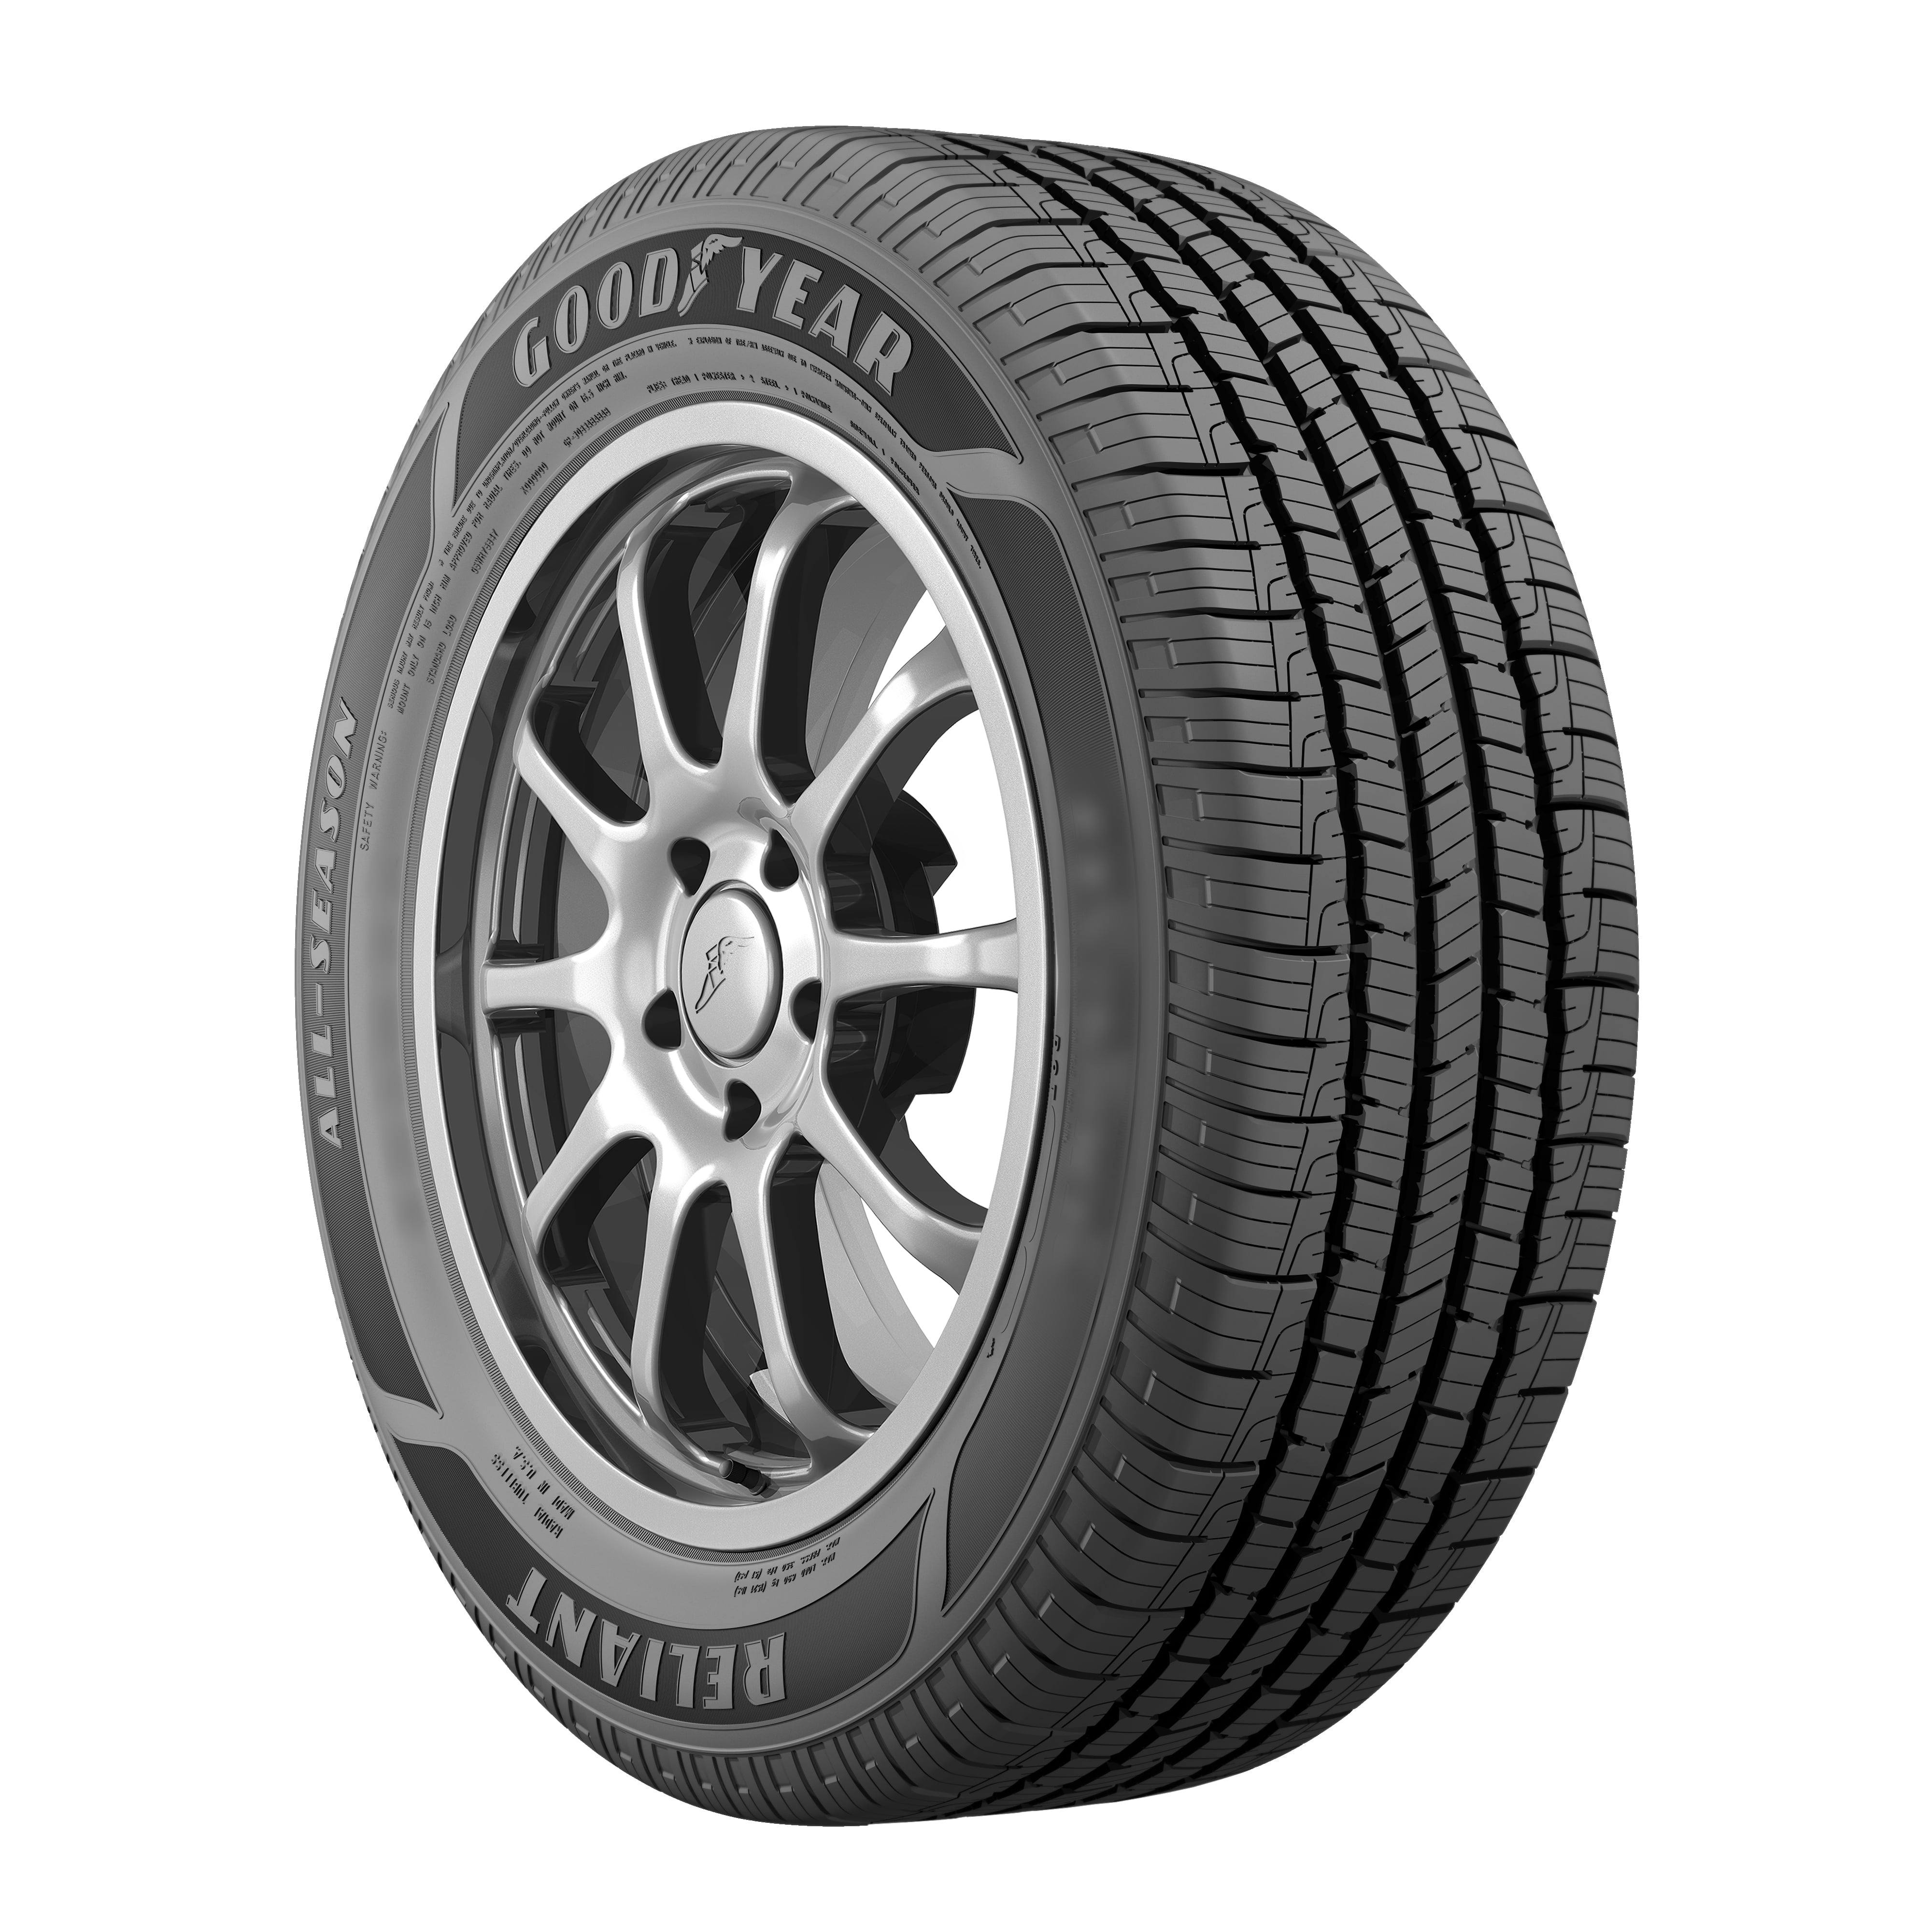 Goodyear Reliant All-Season 225/65R17 102H All-Season Tire